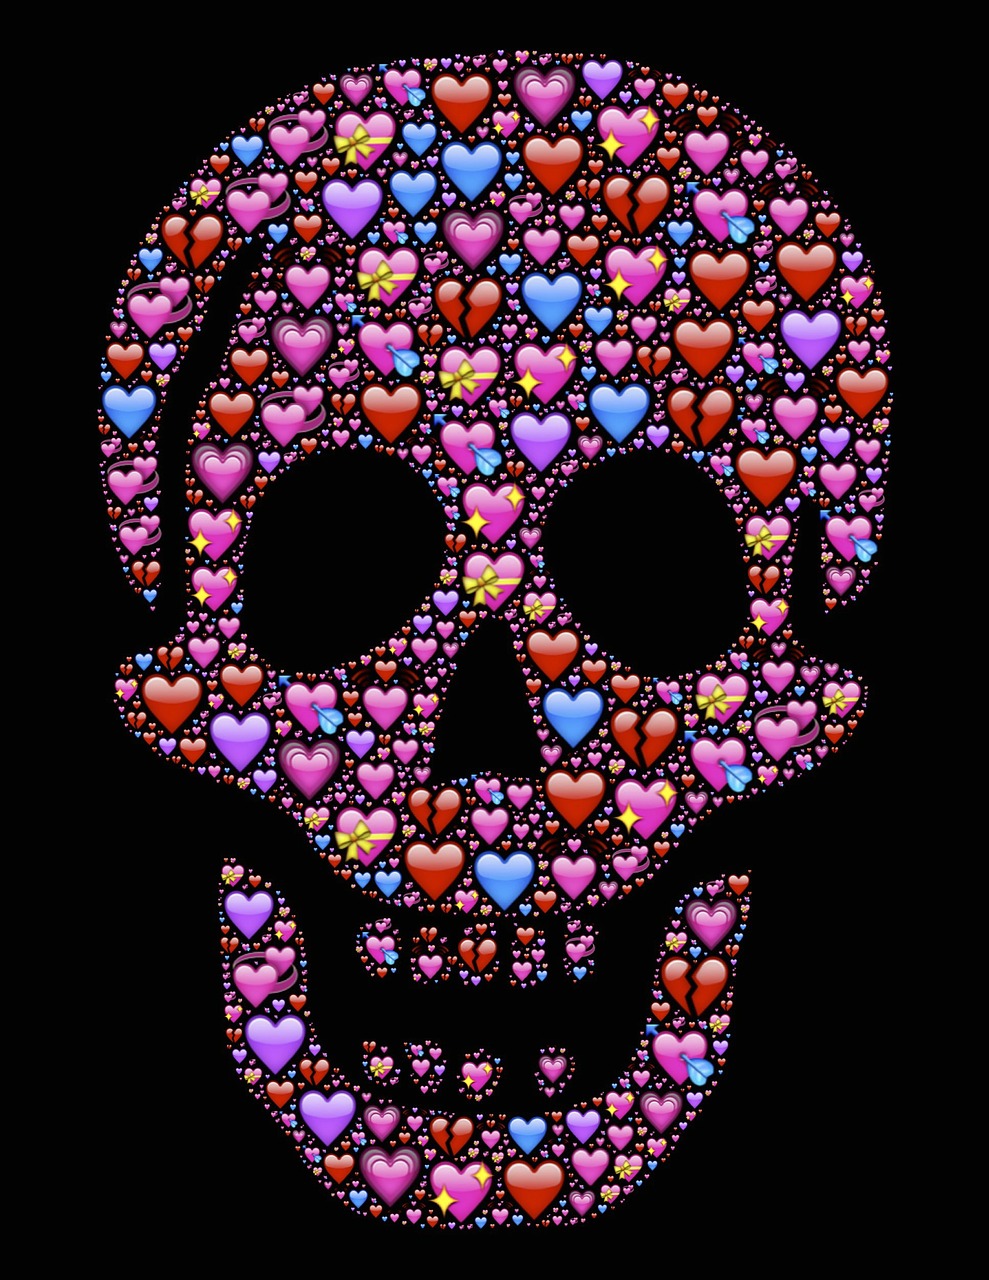 Pink Heart Skull by John Hain